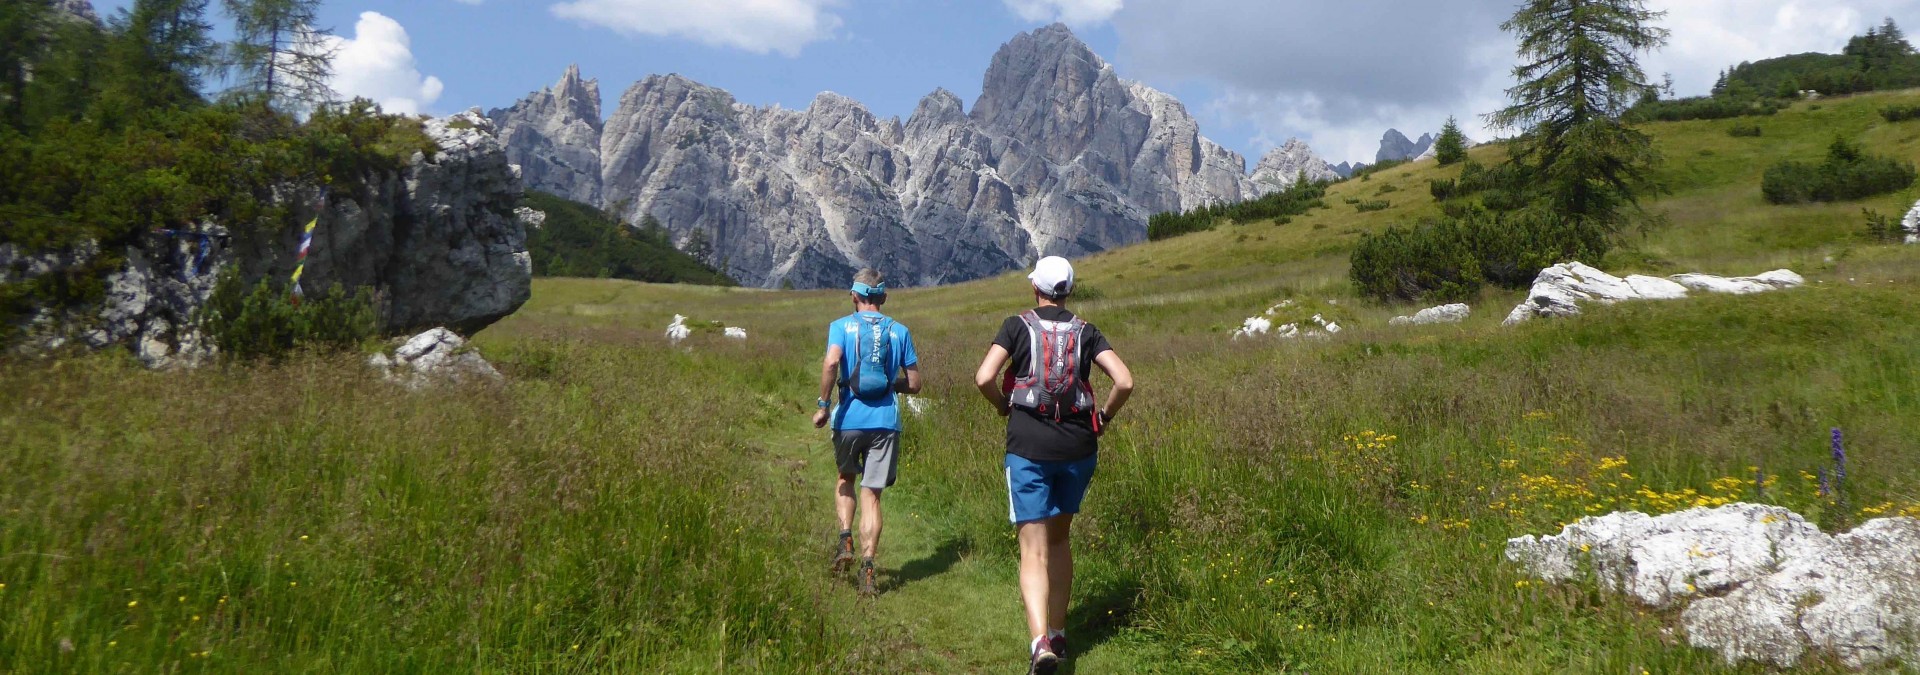 trail run the Dolomites